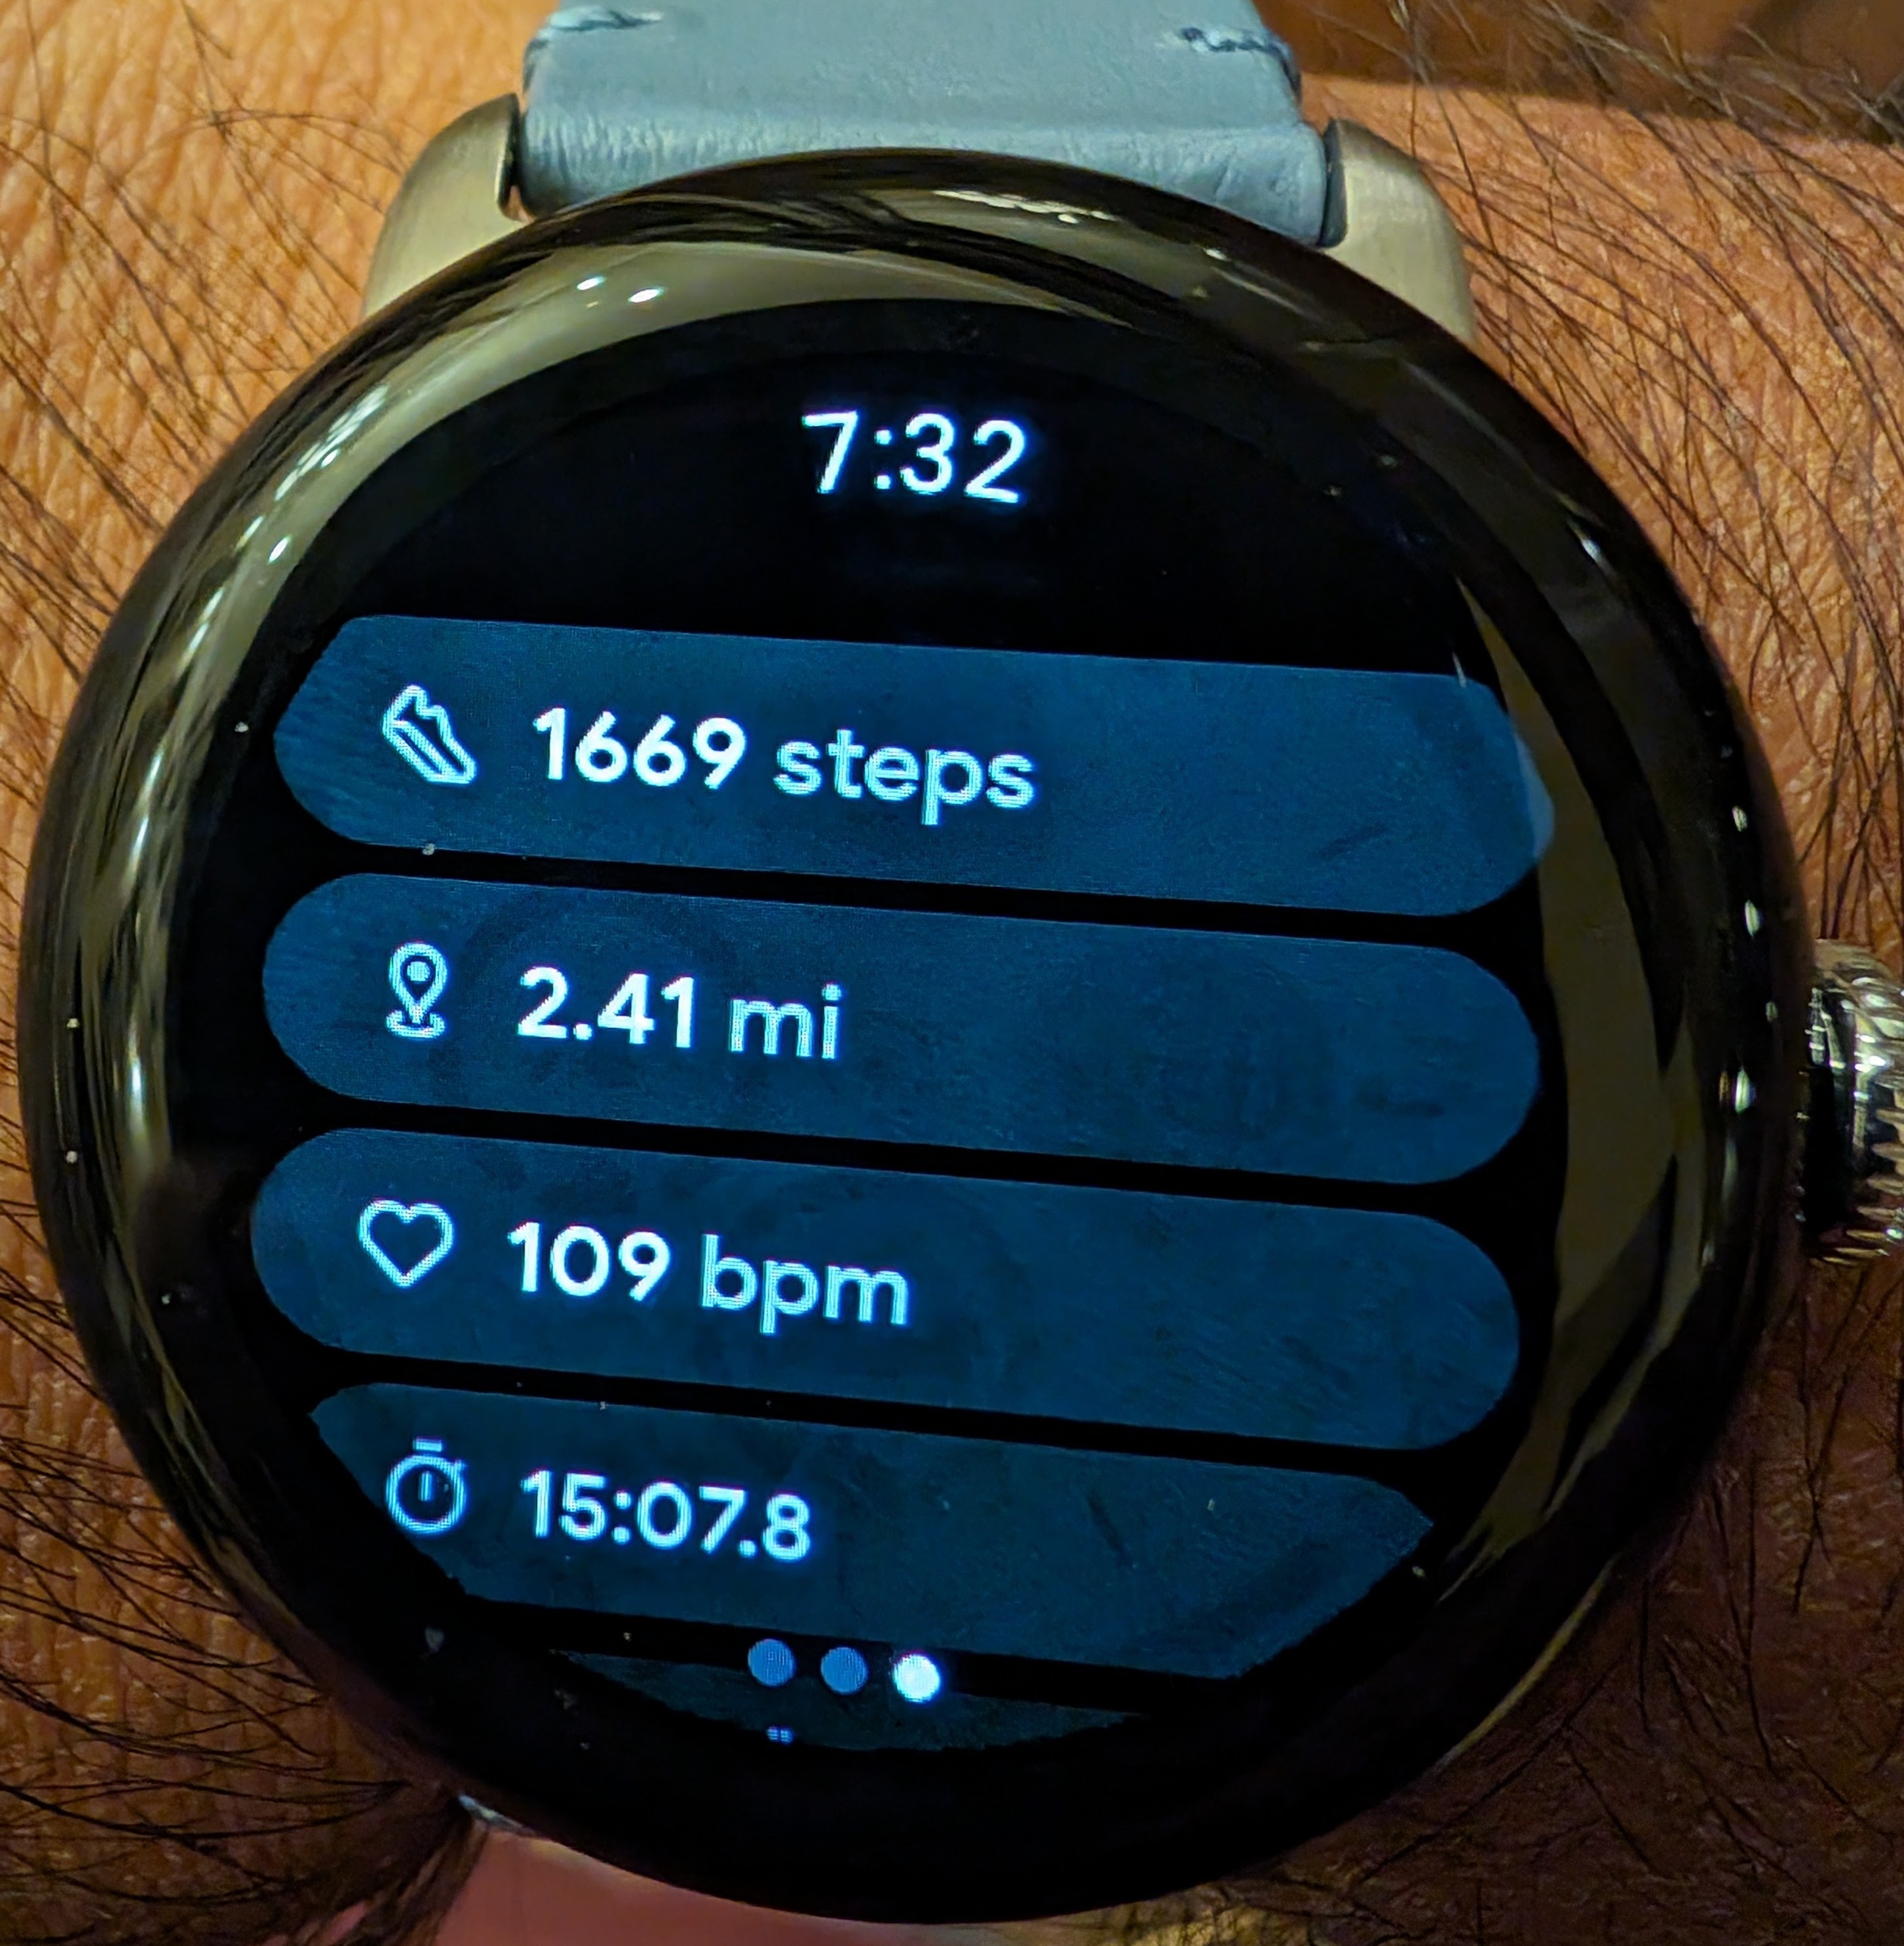 Clairbell HYT_587A_T-500 Smart Watch | Sleep Monitor|Distance  Tracker|Calendaring| Smartwatch Price in India - Buy Clairbell  HYT_587A_T-500 Smart Watch | Sleep Monitor|Distance Tracker|Calendaring|  Smartwatch online at Flipkart.com